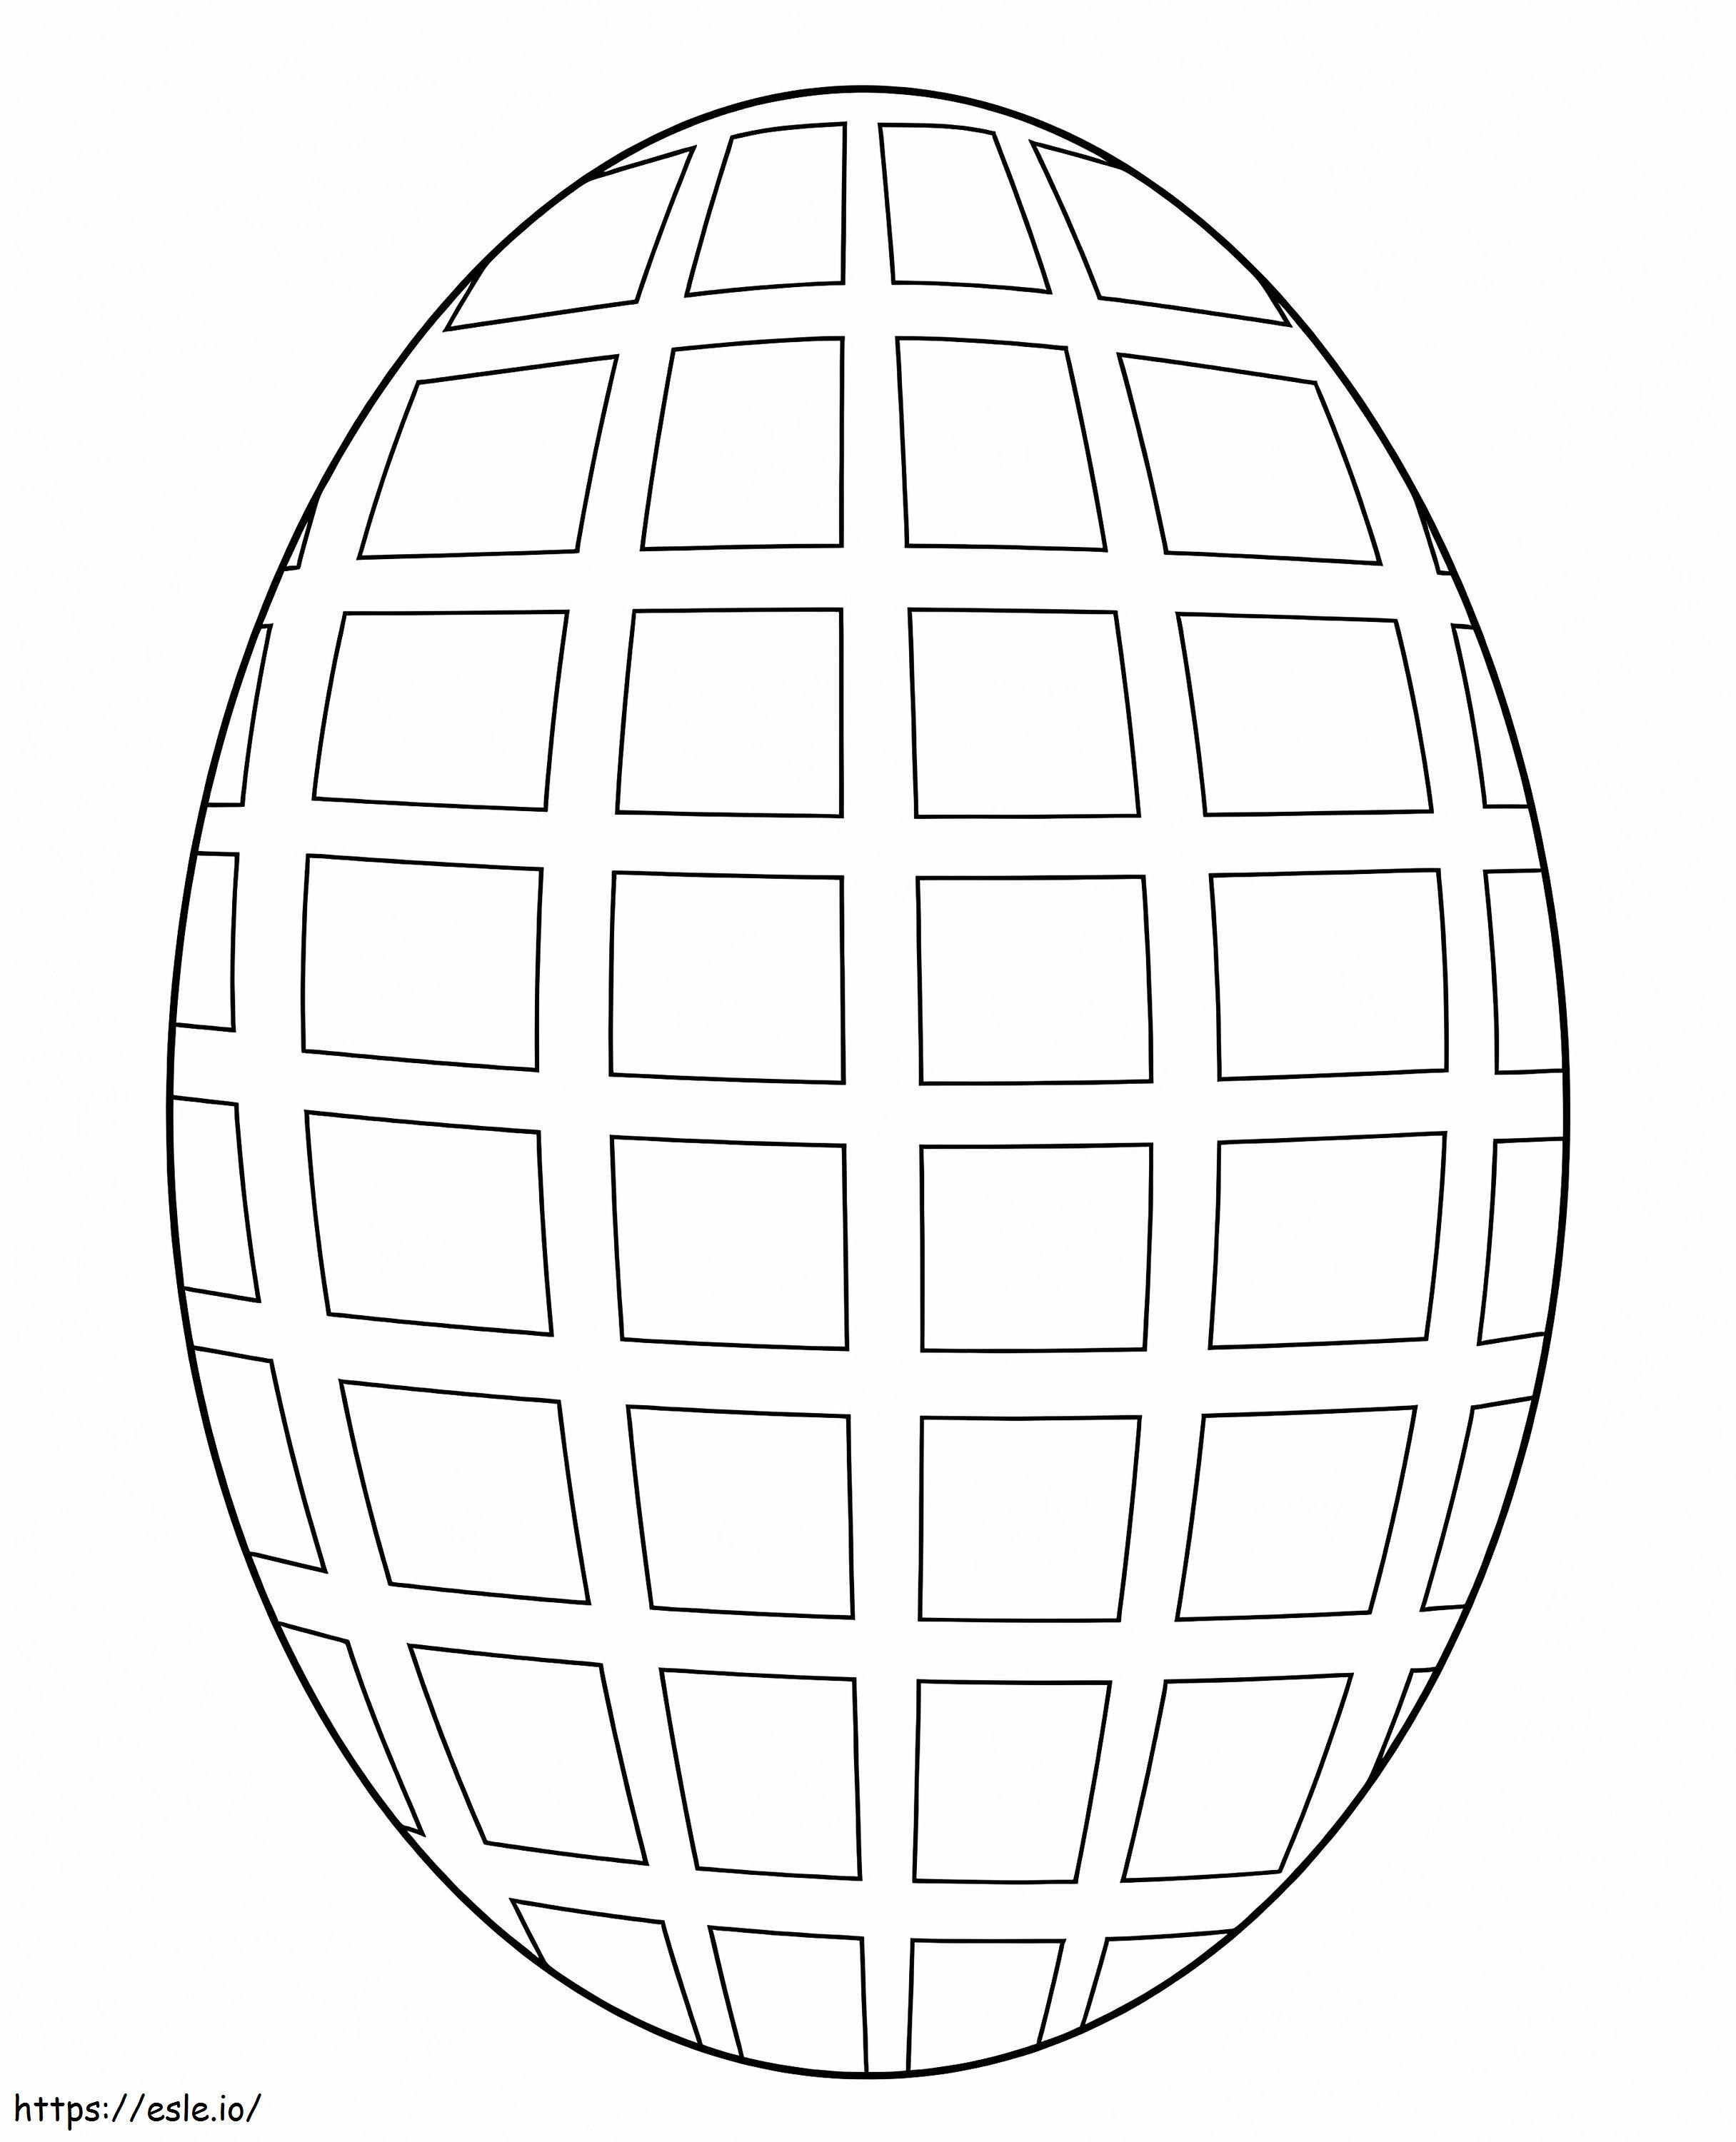 Egg Shaped Mosaic coloring page